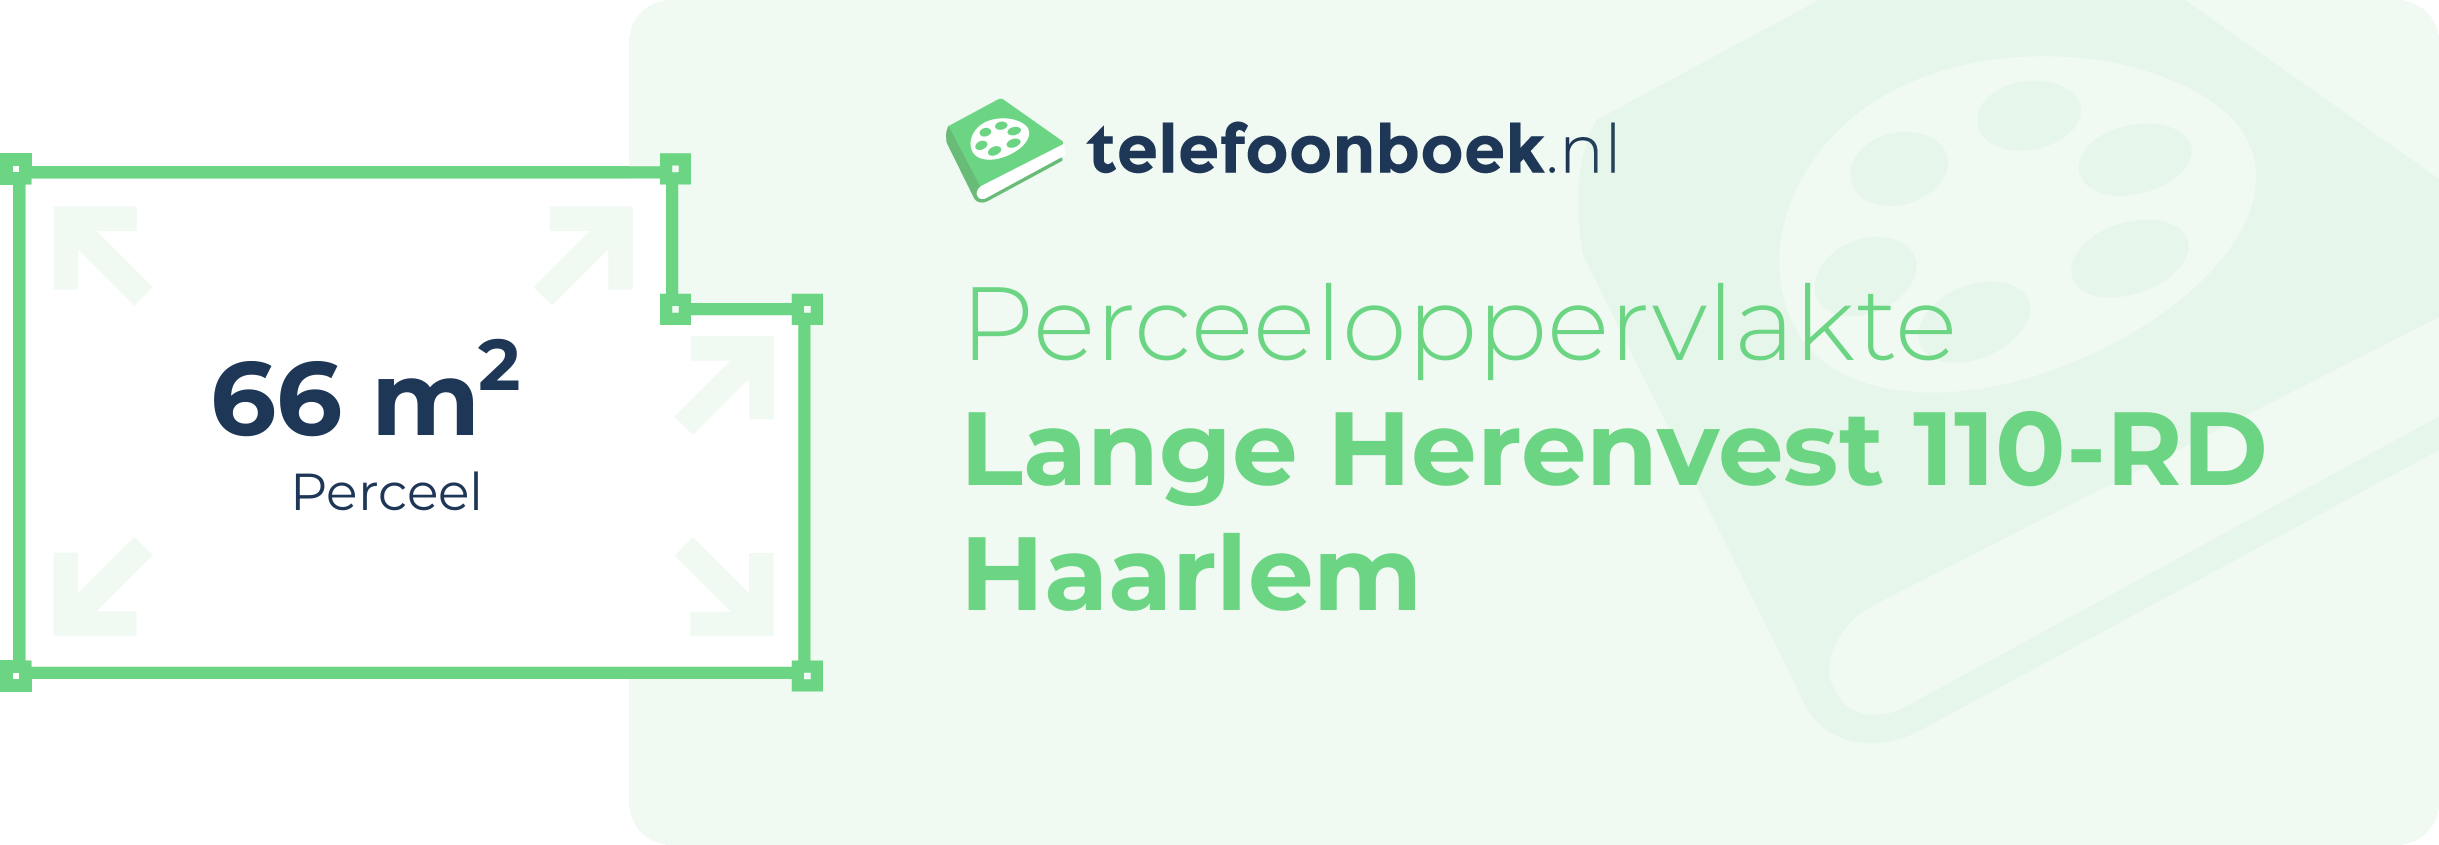 Perceeloppervlakte Lange Herenvest 110-RD Haarlem